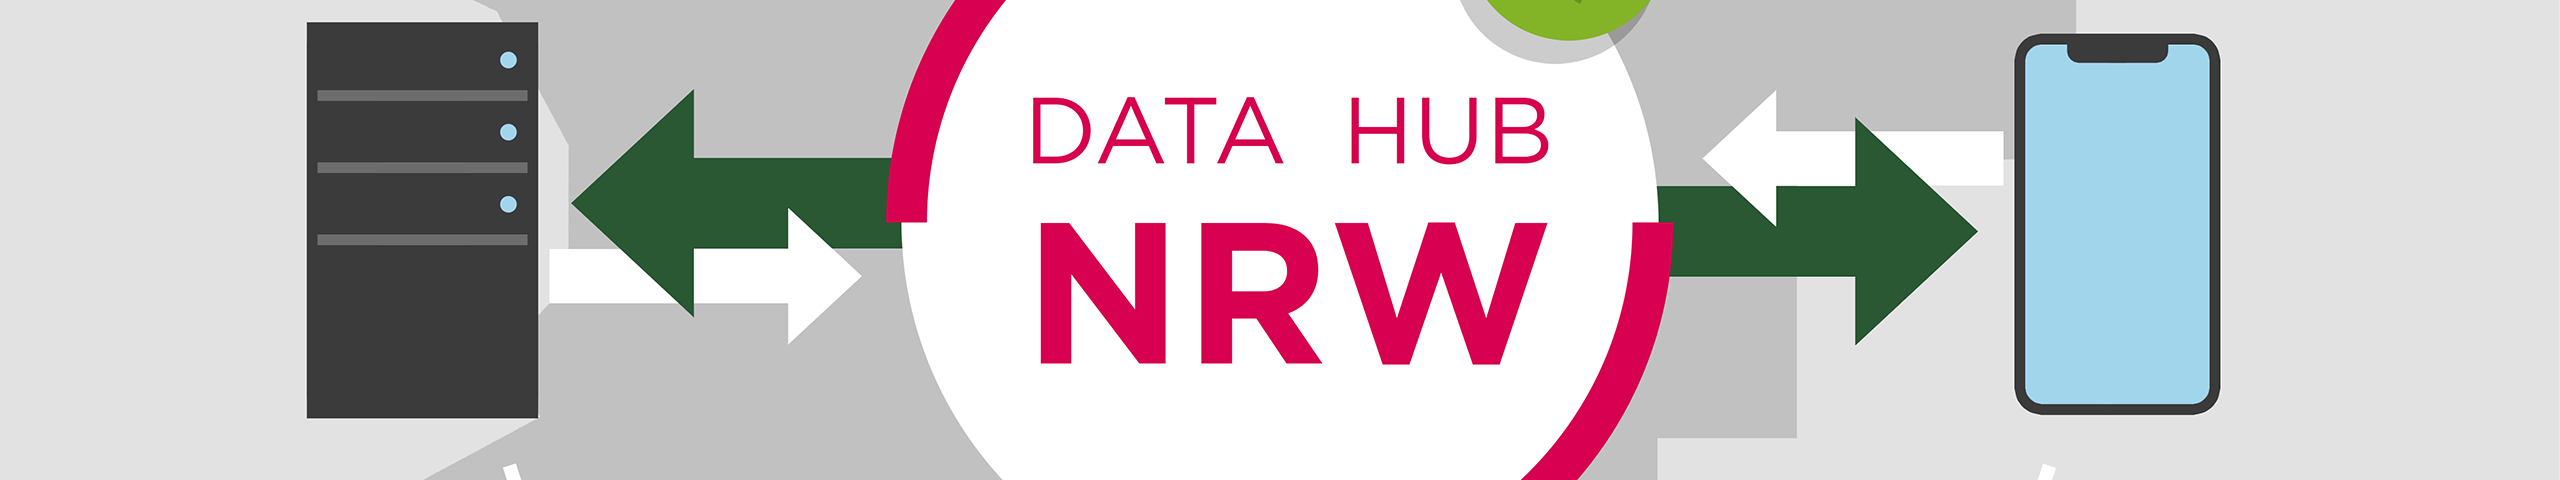 Data Hub NRW - Qualität